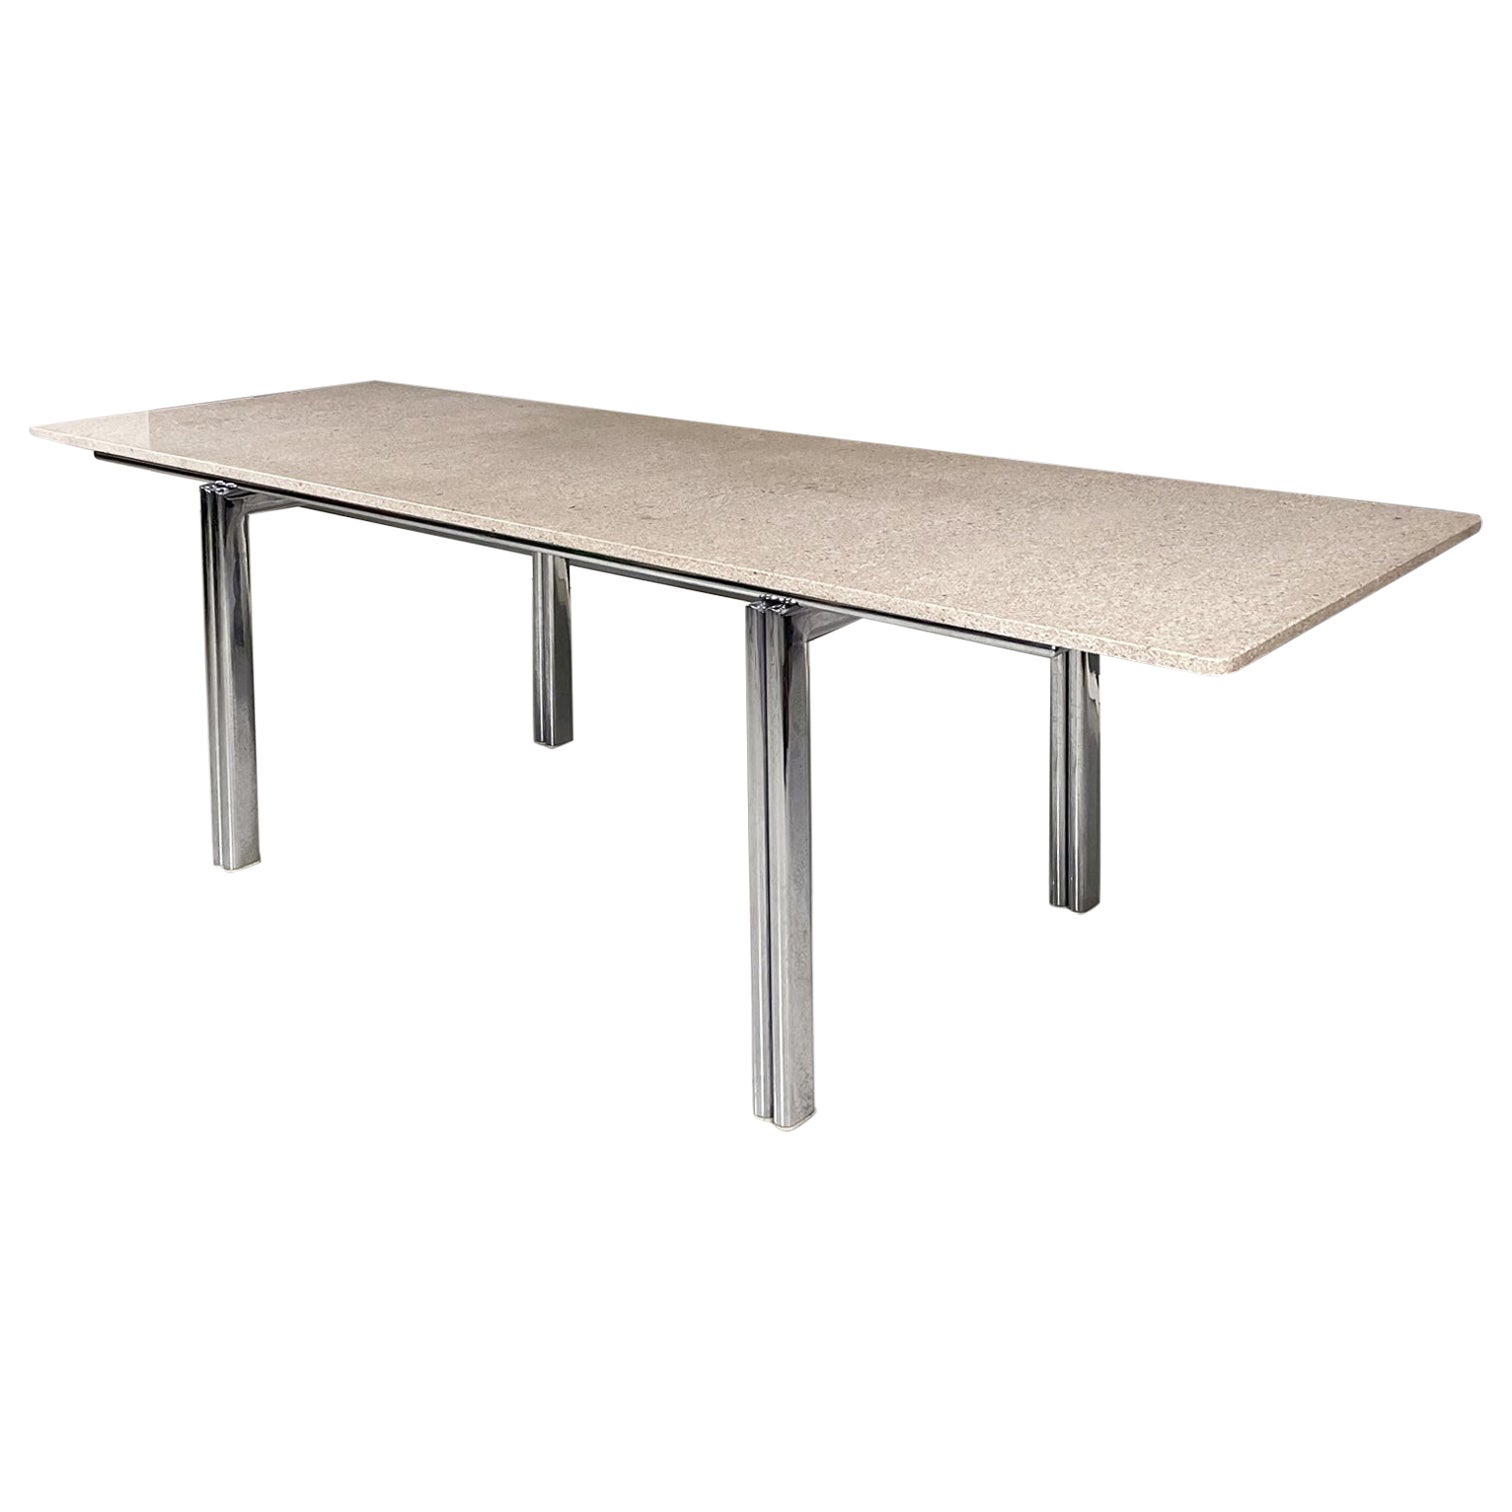 Italian modern Granite steel dining table Alcinoo by Zeev Aram for Gavina, 1970s For Sale